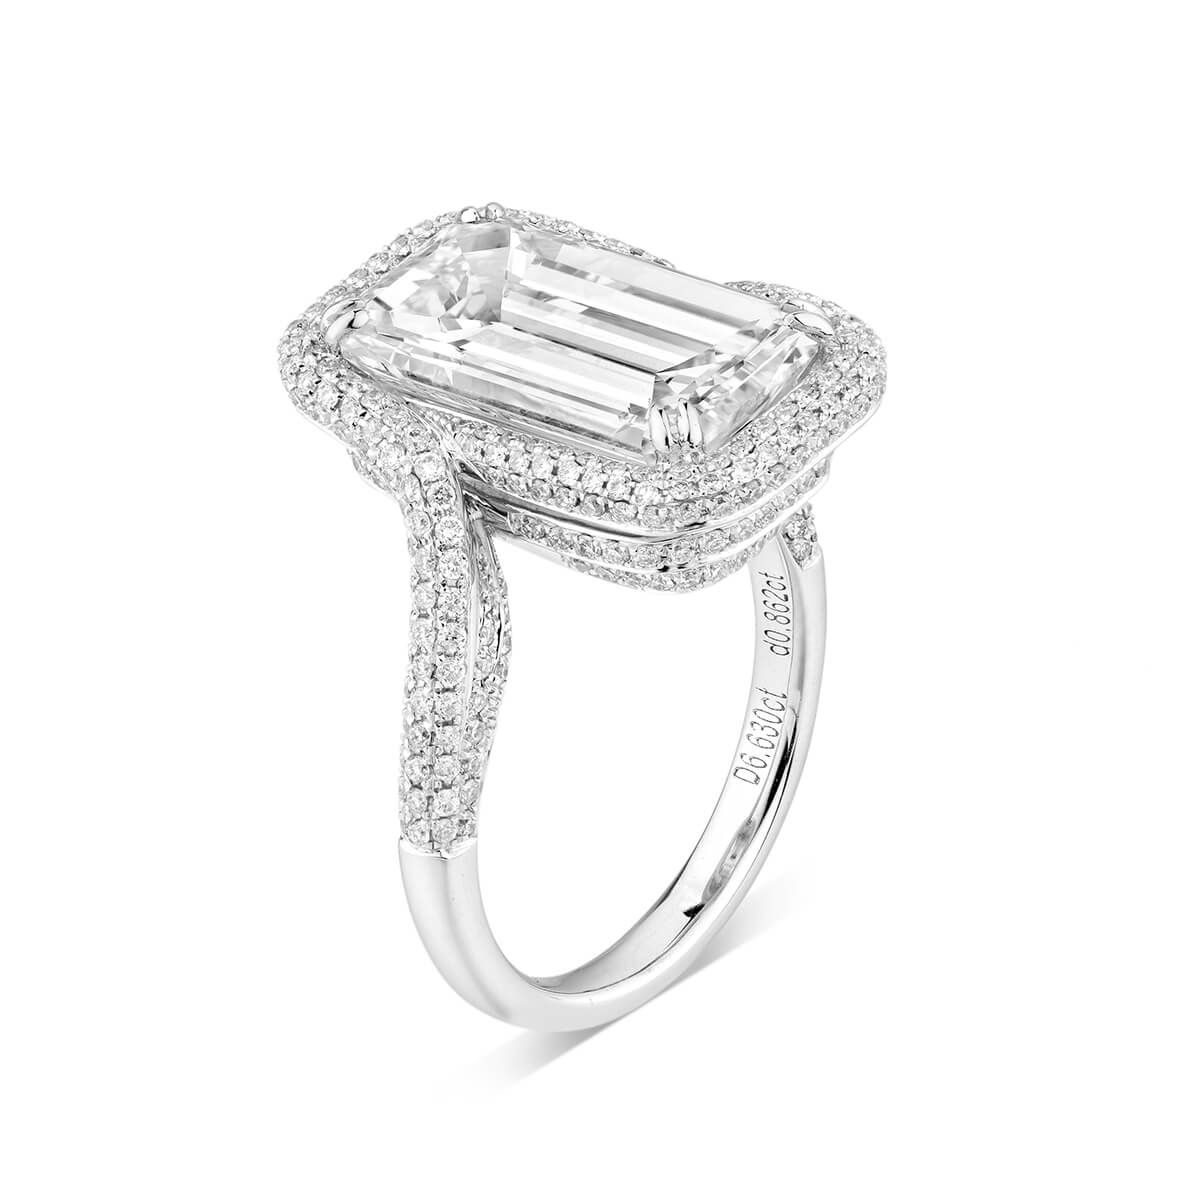  White Diamond Ring, 7.49 Ct. TW, Emerald shape, GIA Certified, 6193392392